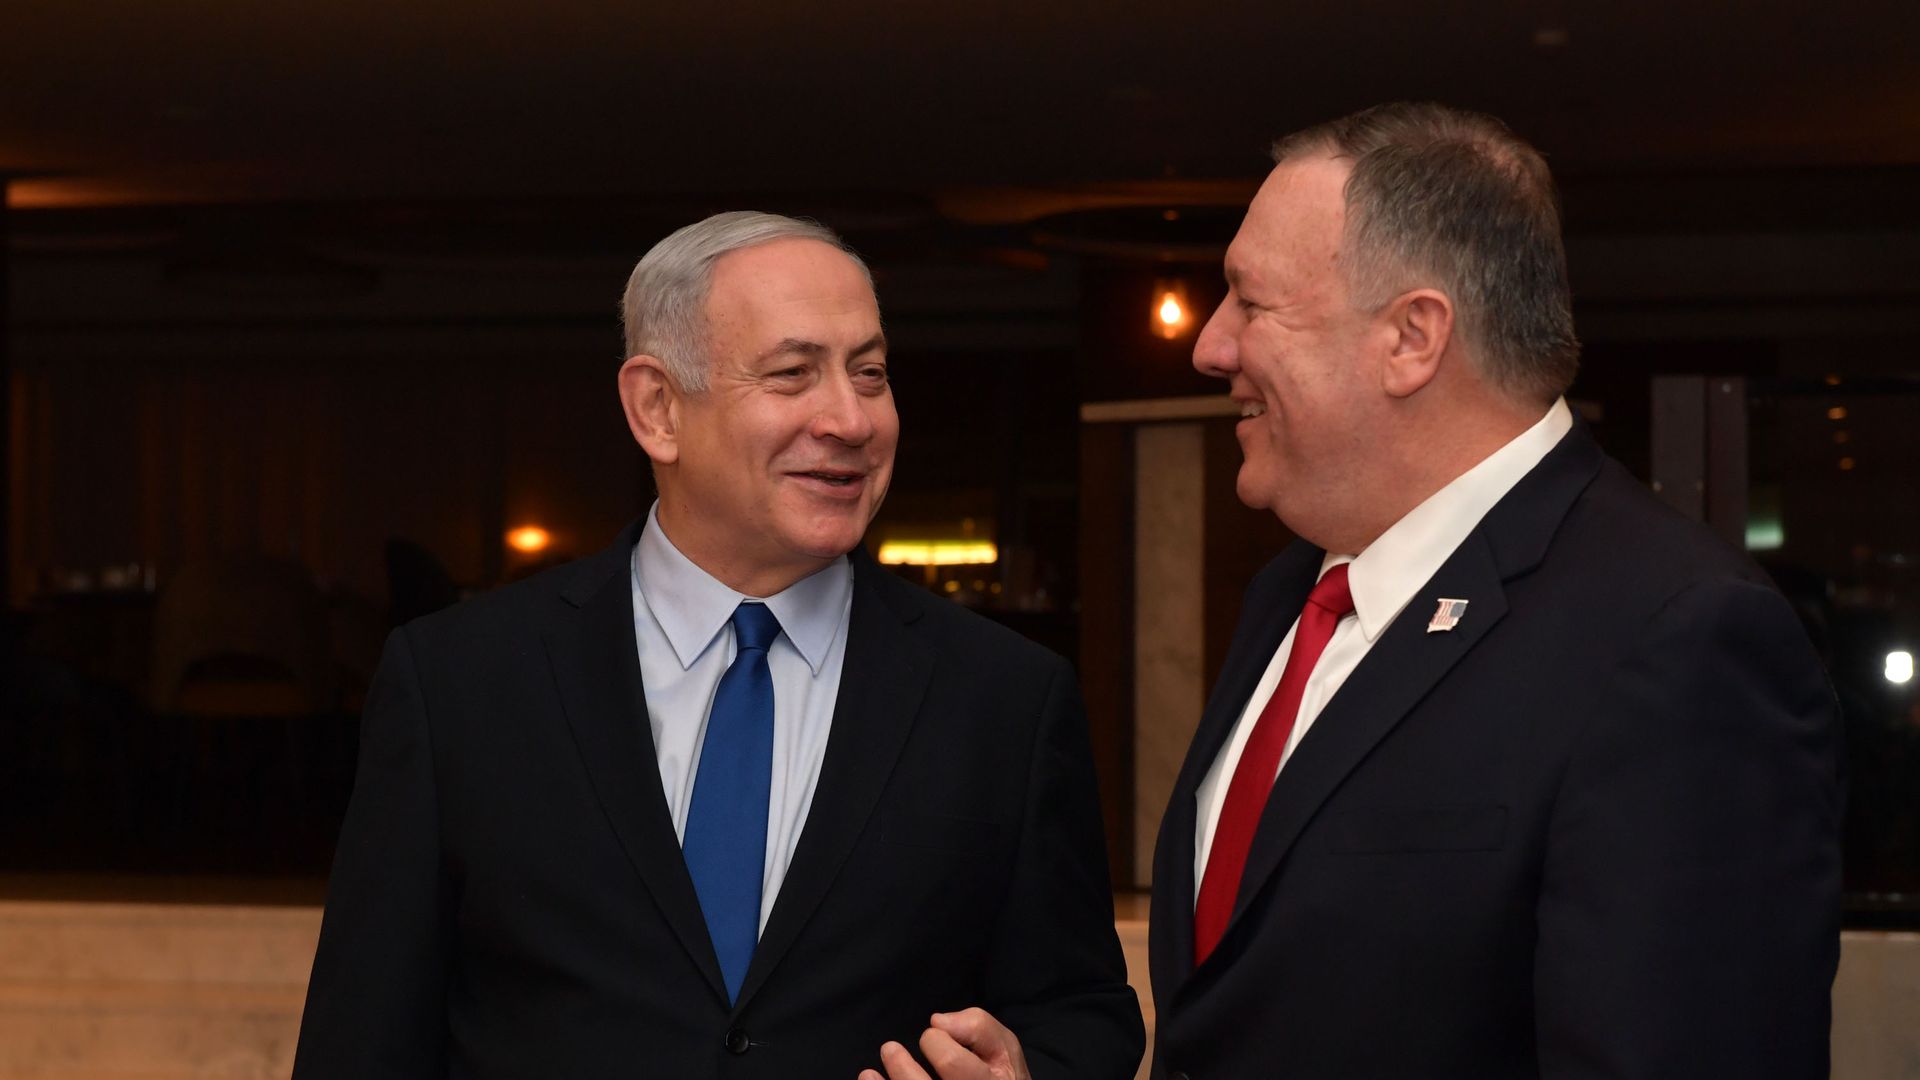 Netanyahu and pompeo